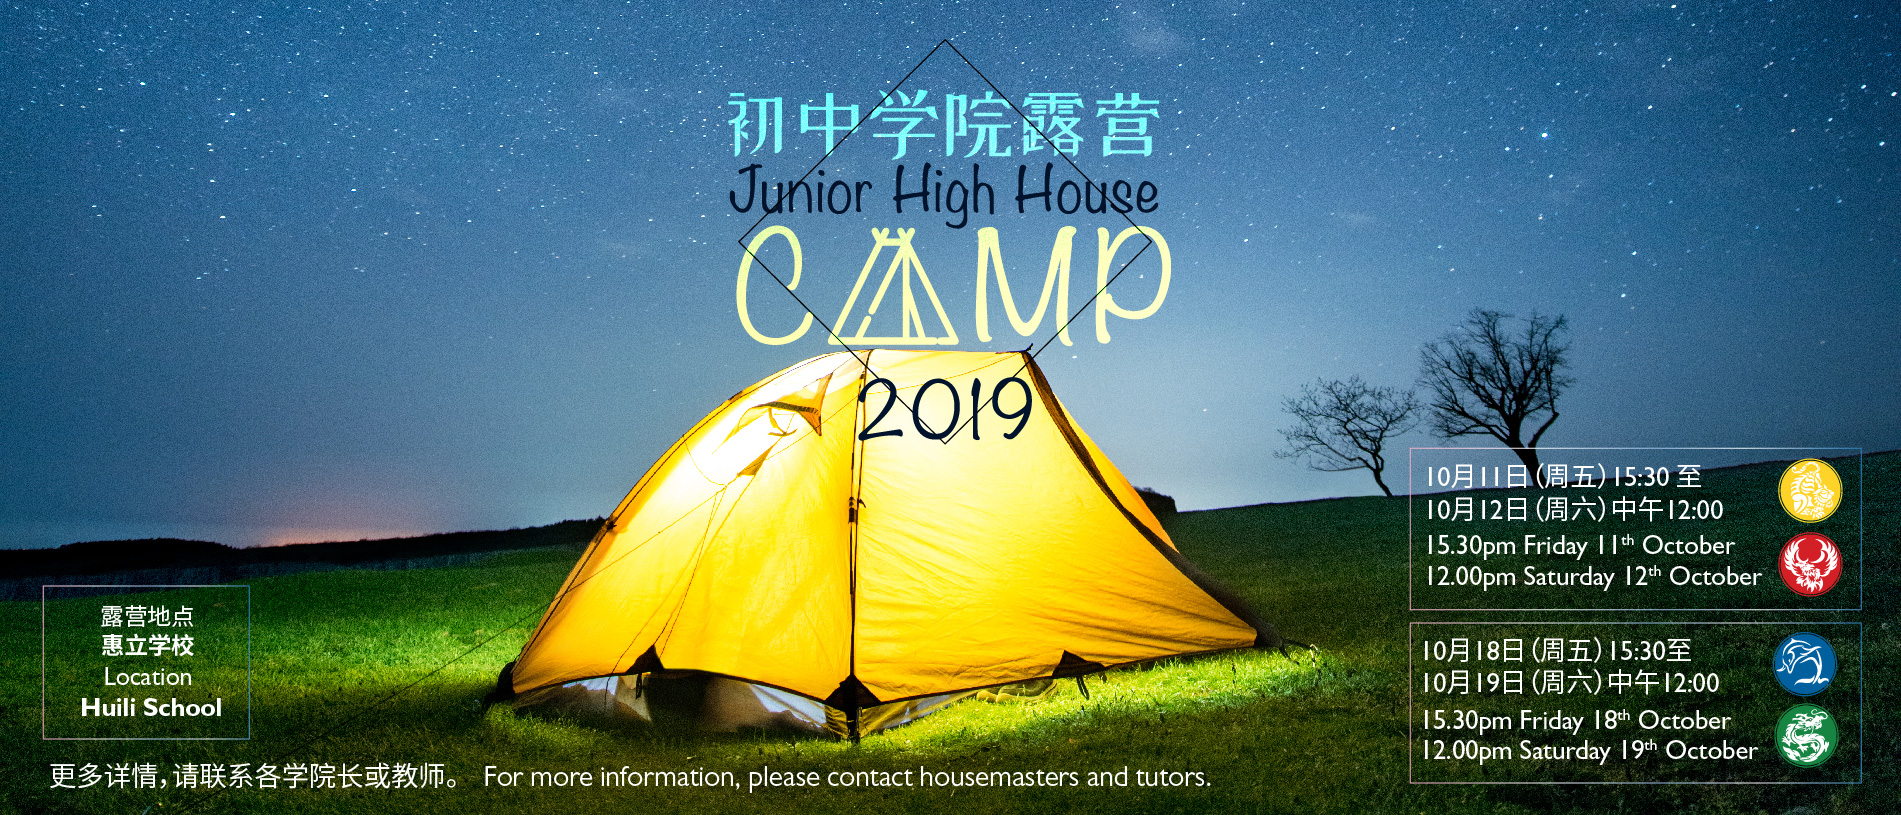 Junior High House Camp